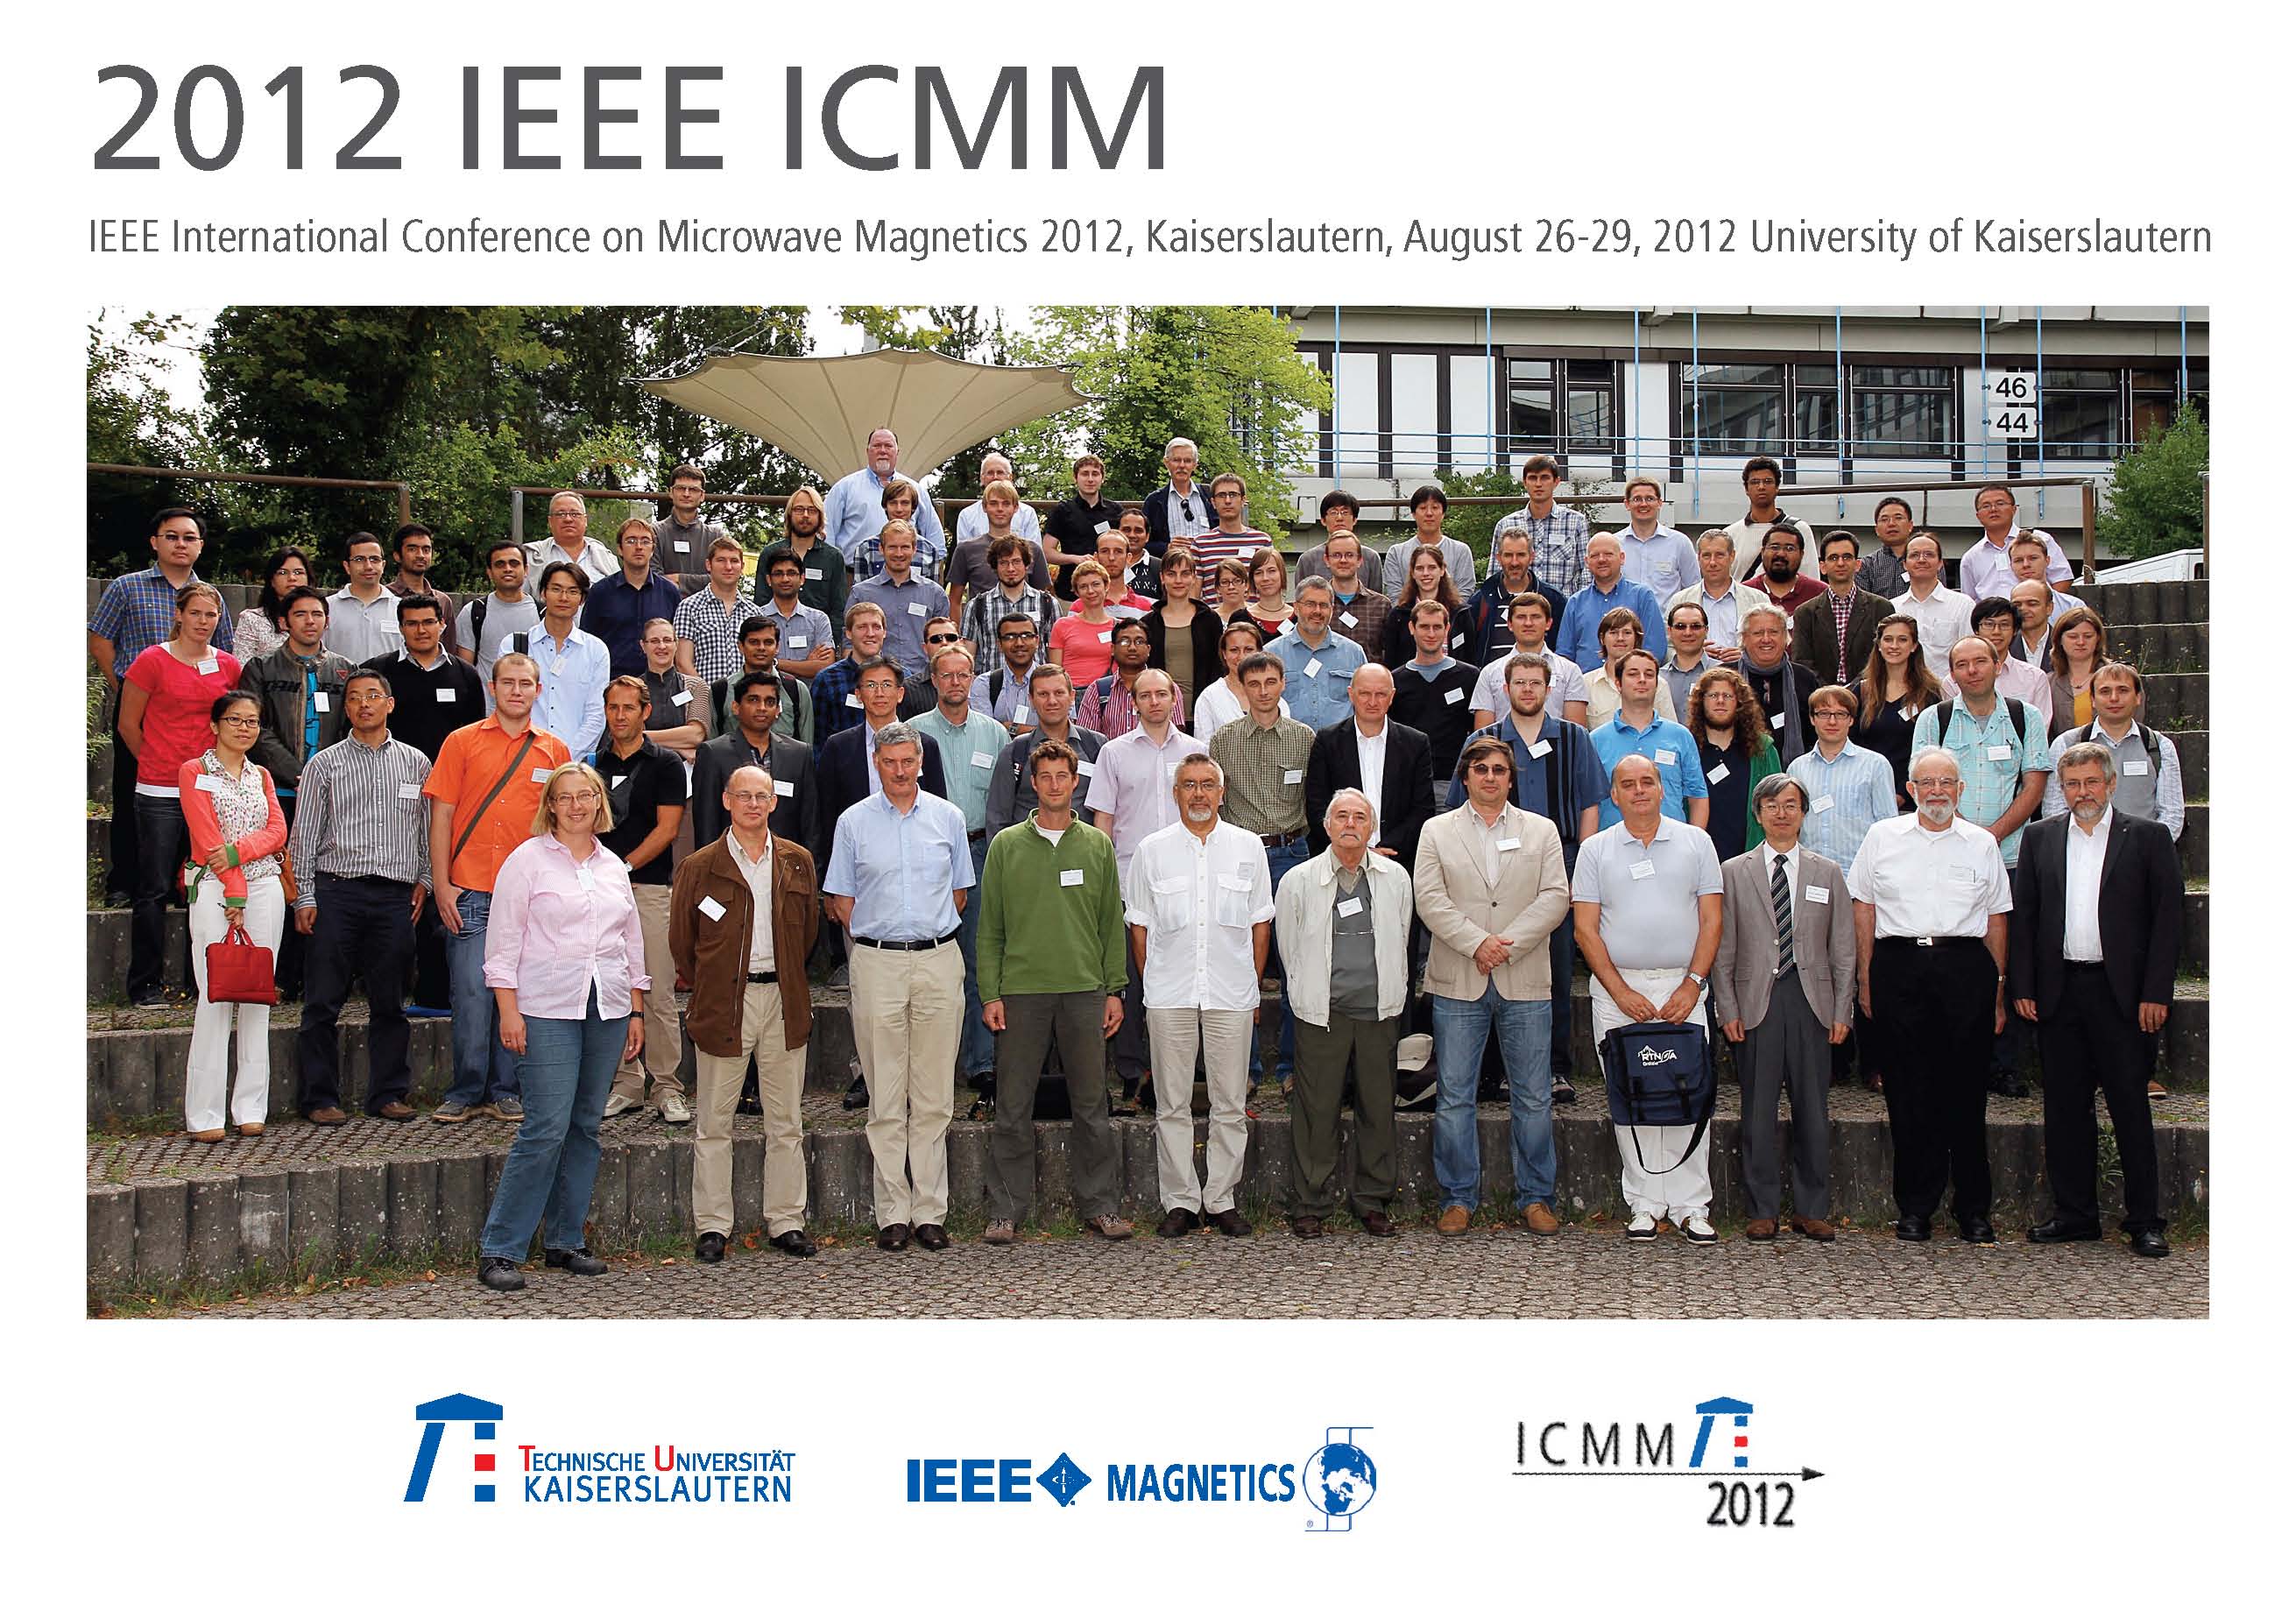 ICMM_2012_Kaiserslautern_conference1.jpg